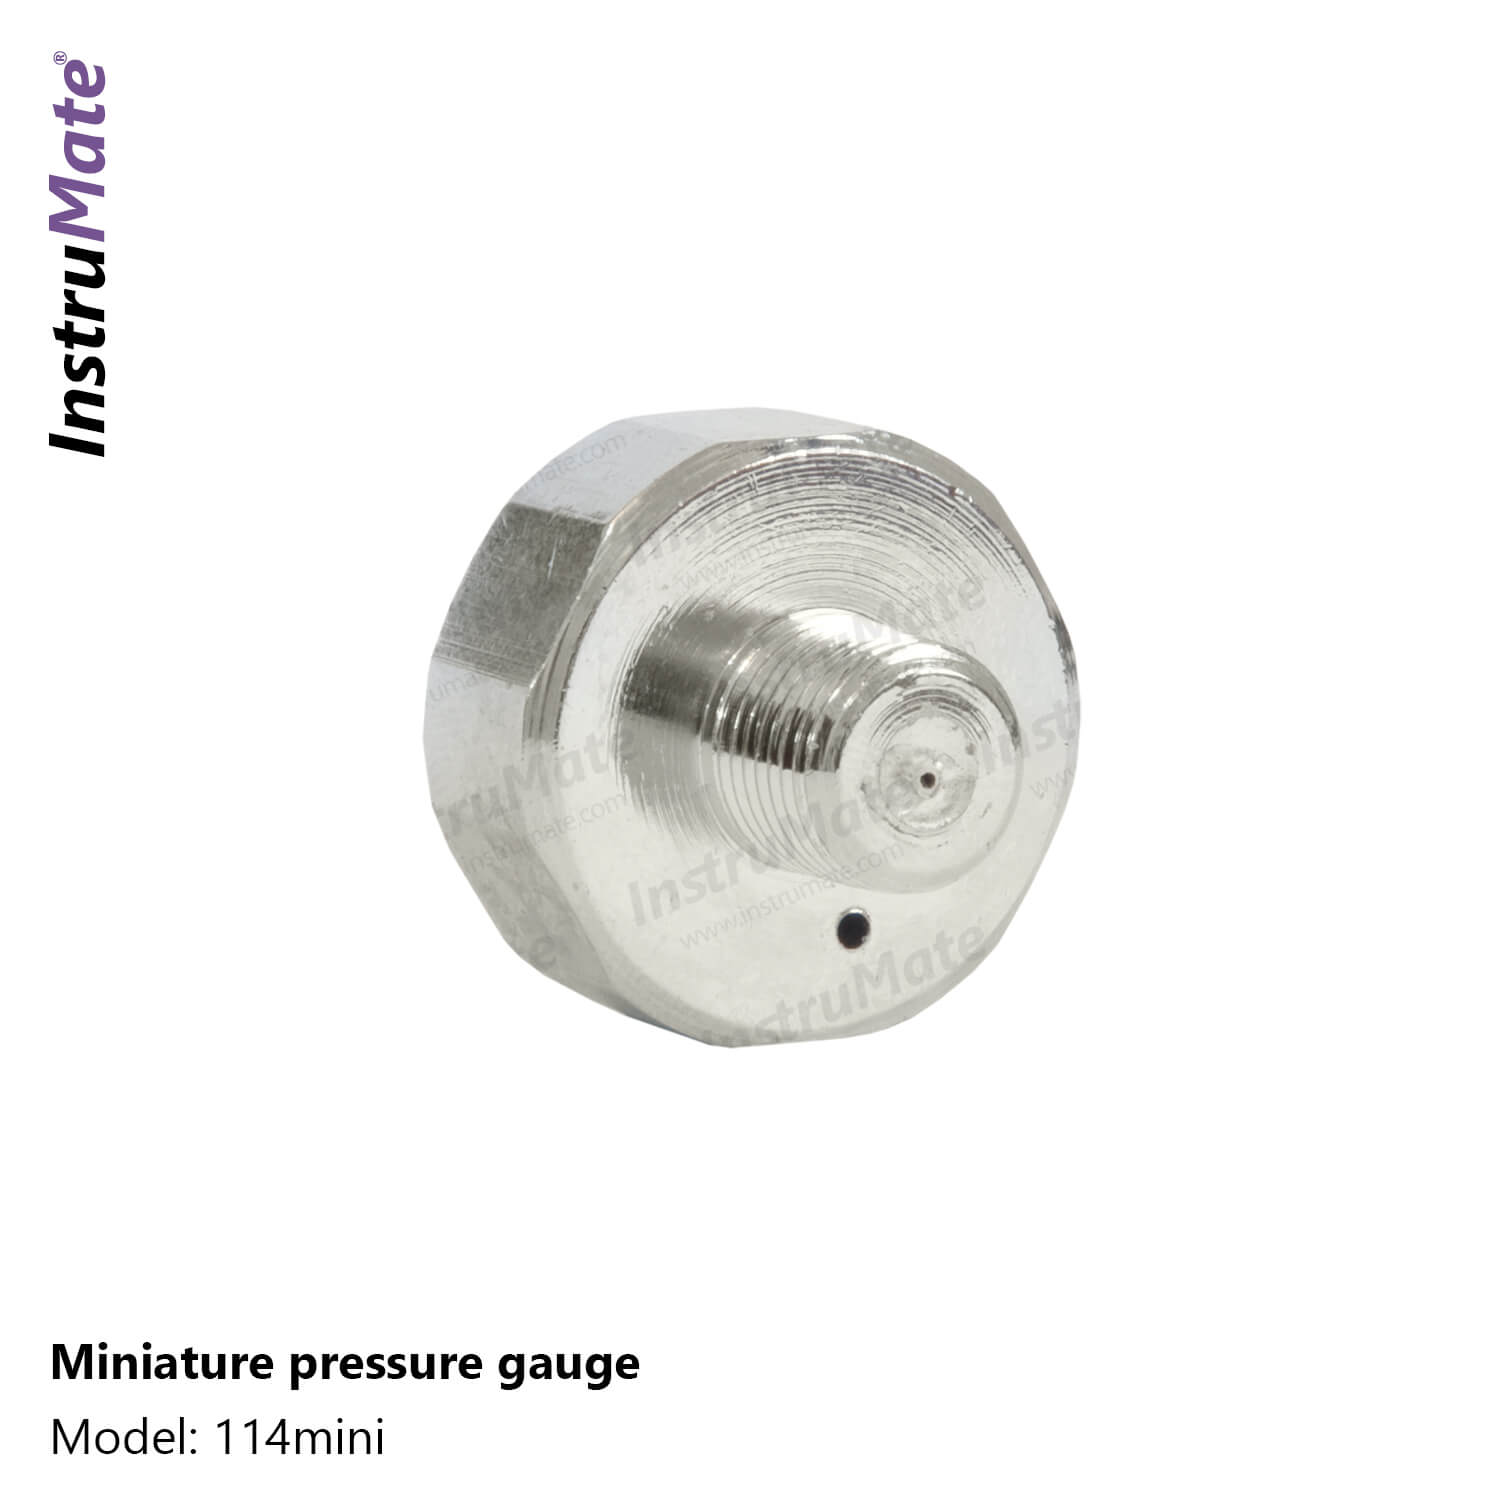 Mini pressure gauge - 114mini - Instrumate